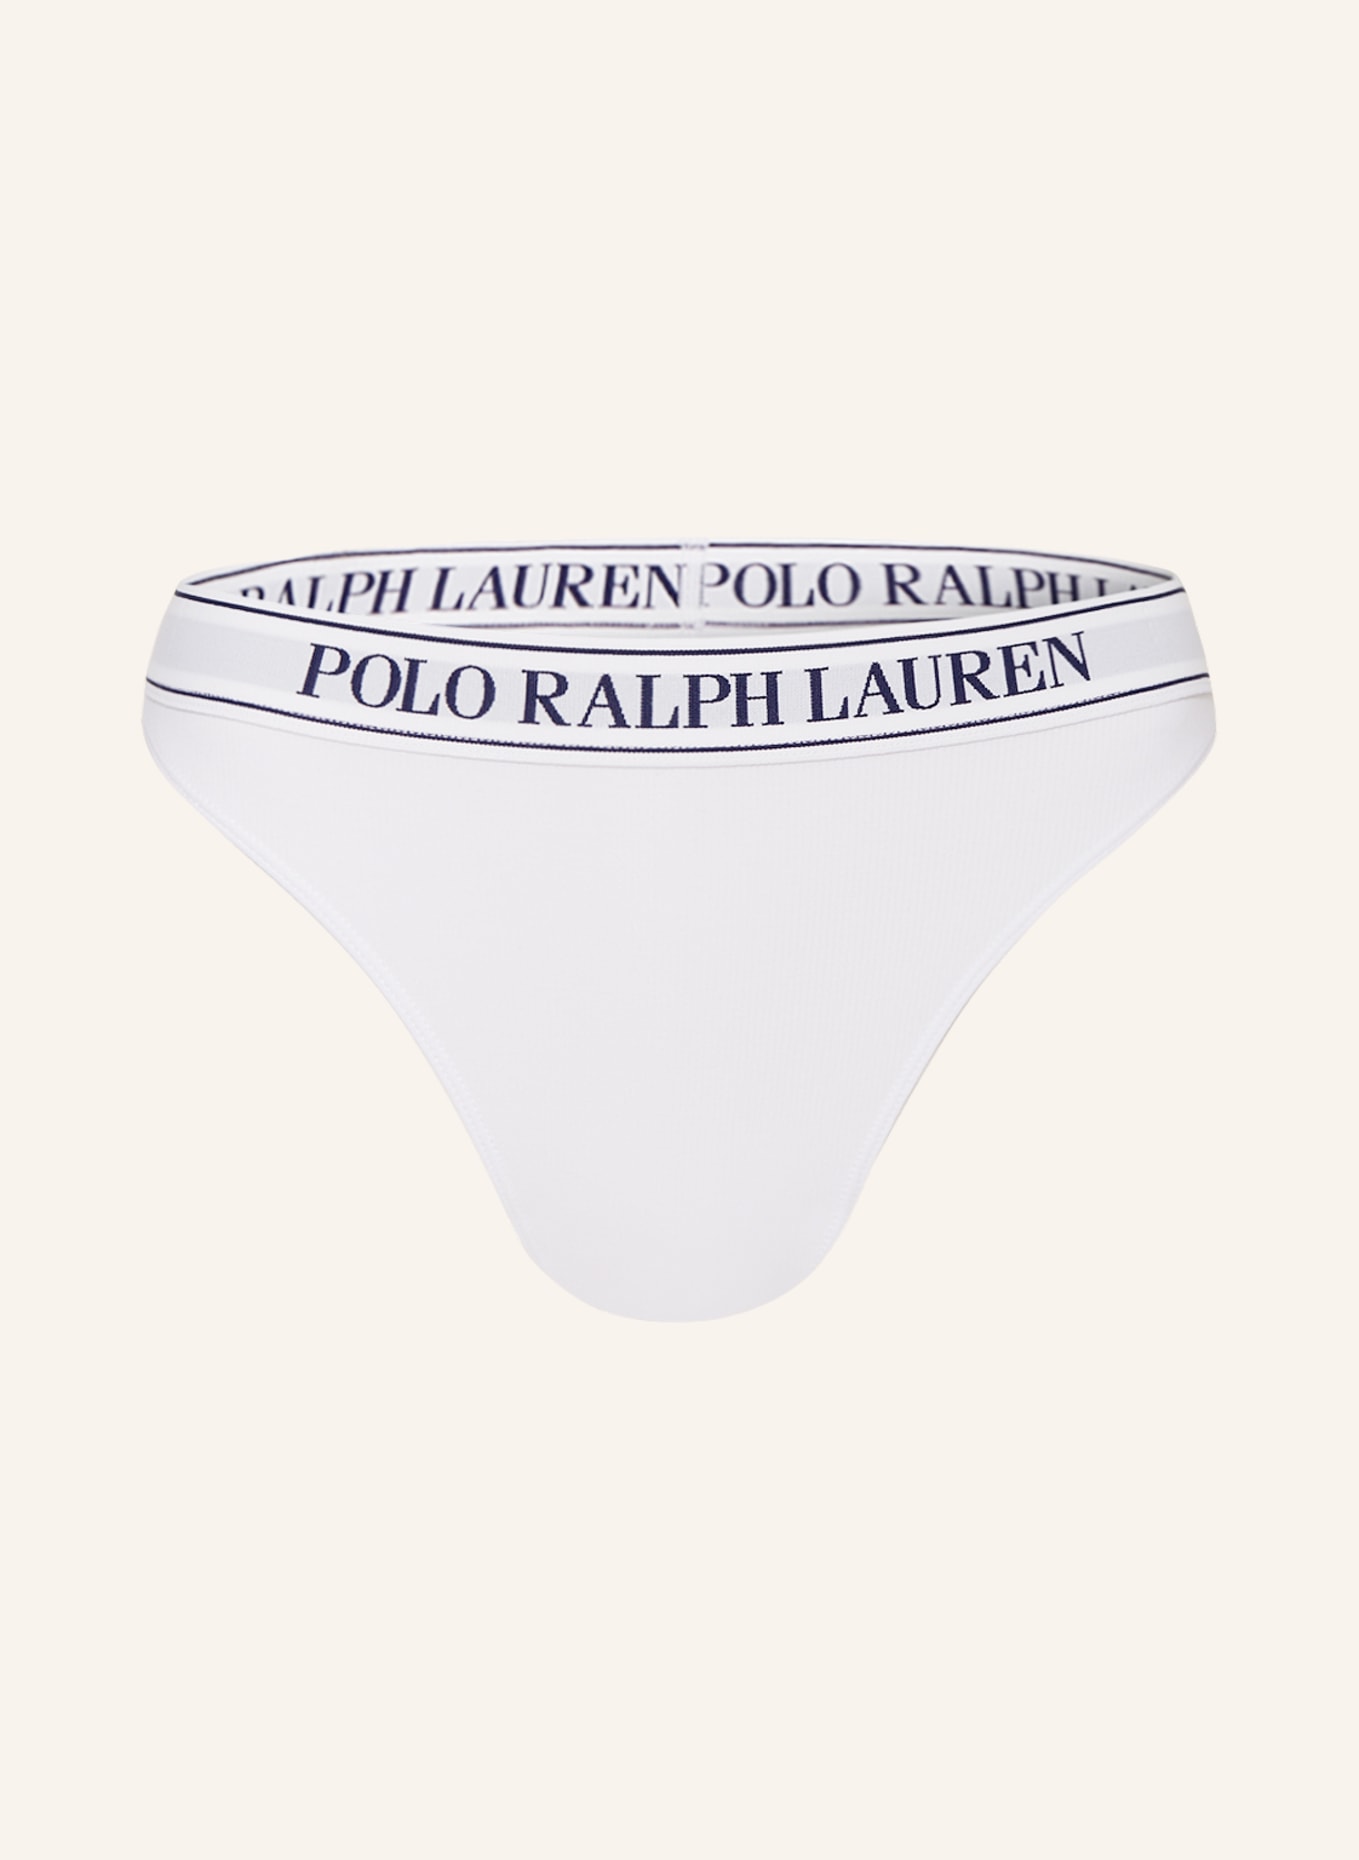 Polo Ralph Lauren Underwear for Women